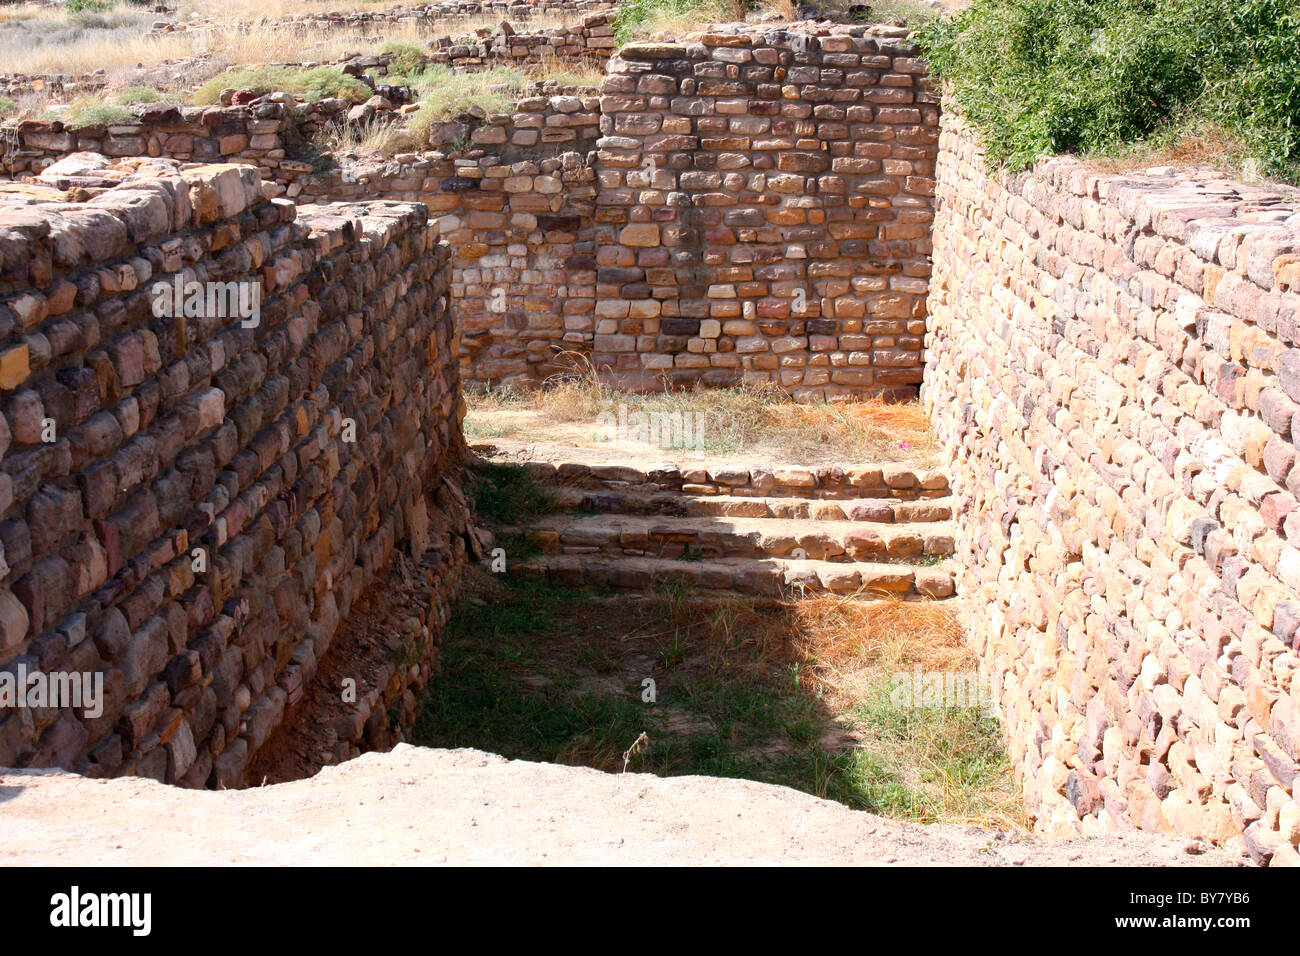 Excavated ruins of Harrappa civilisation at Dholavira, anicient site of Indus valley civilisation, Kutch,Gujarat, india Stock Photo